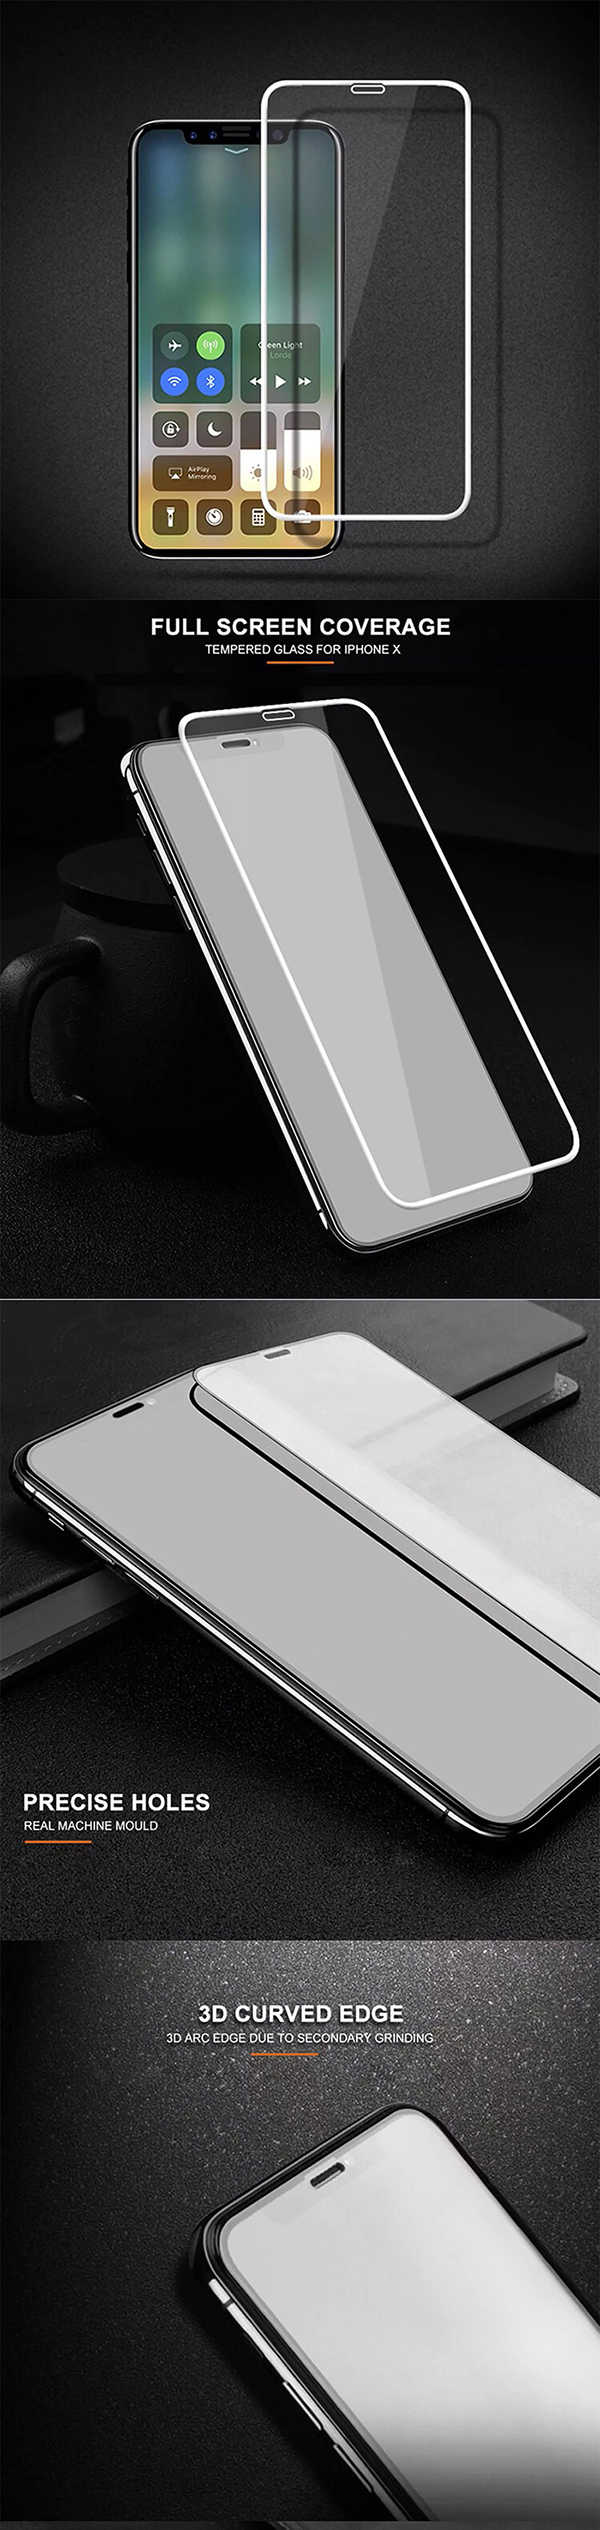 cristal templado 5D iphone x.jpeg